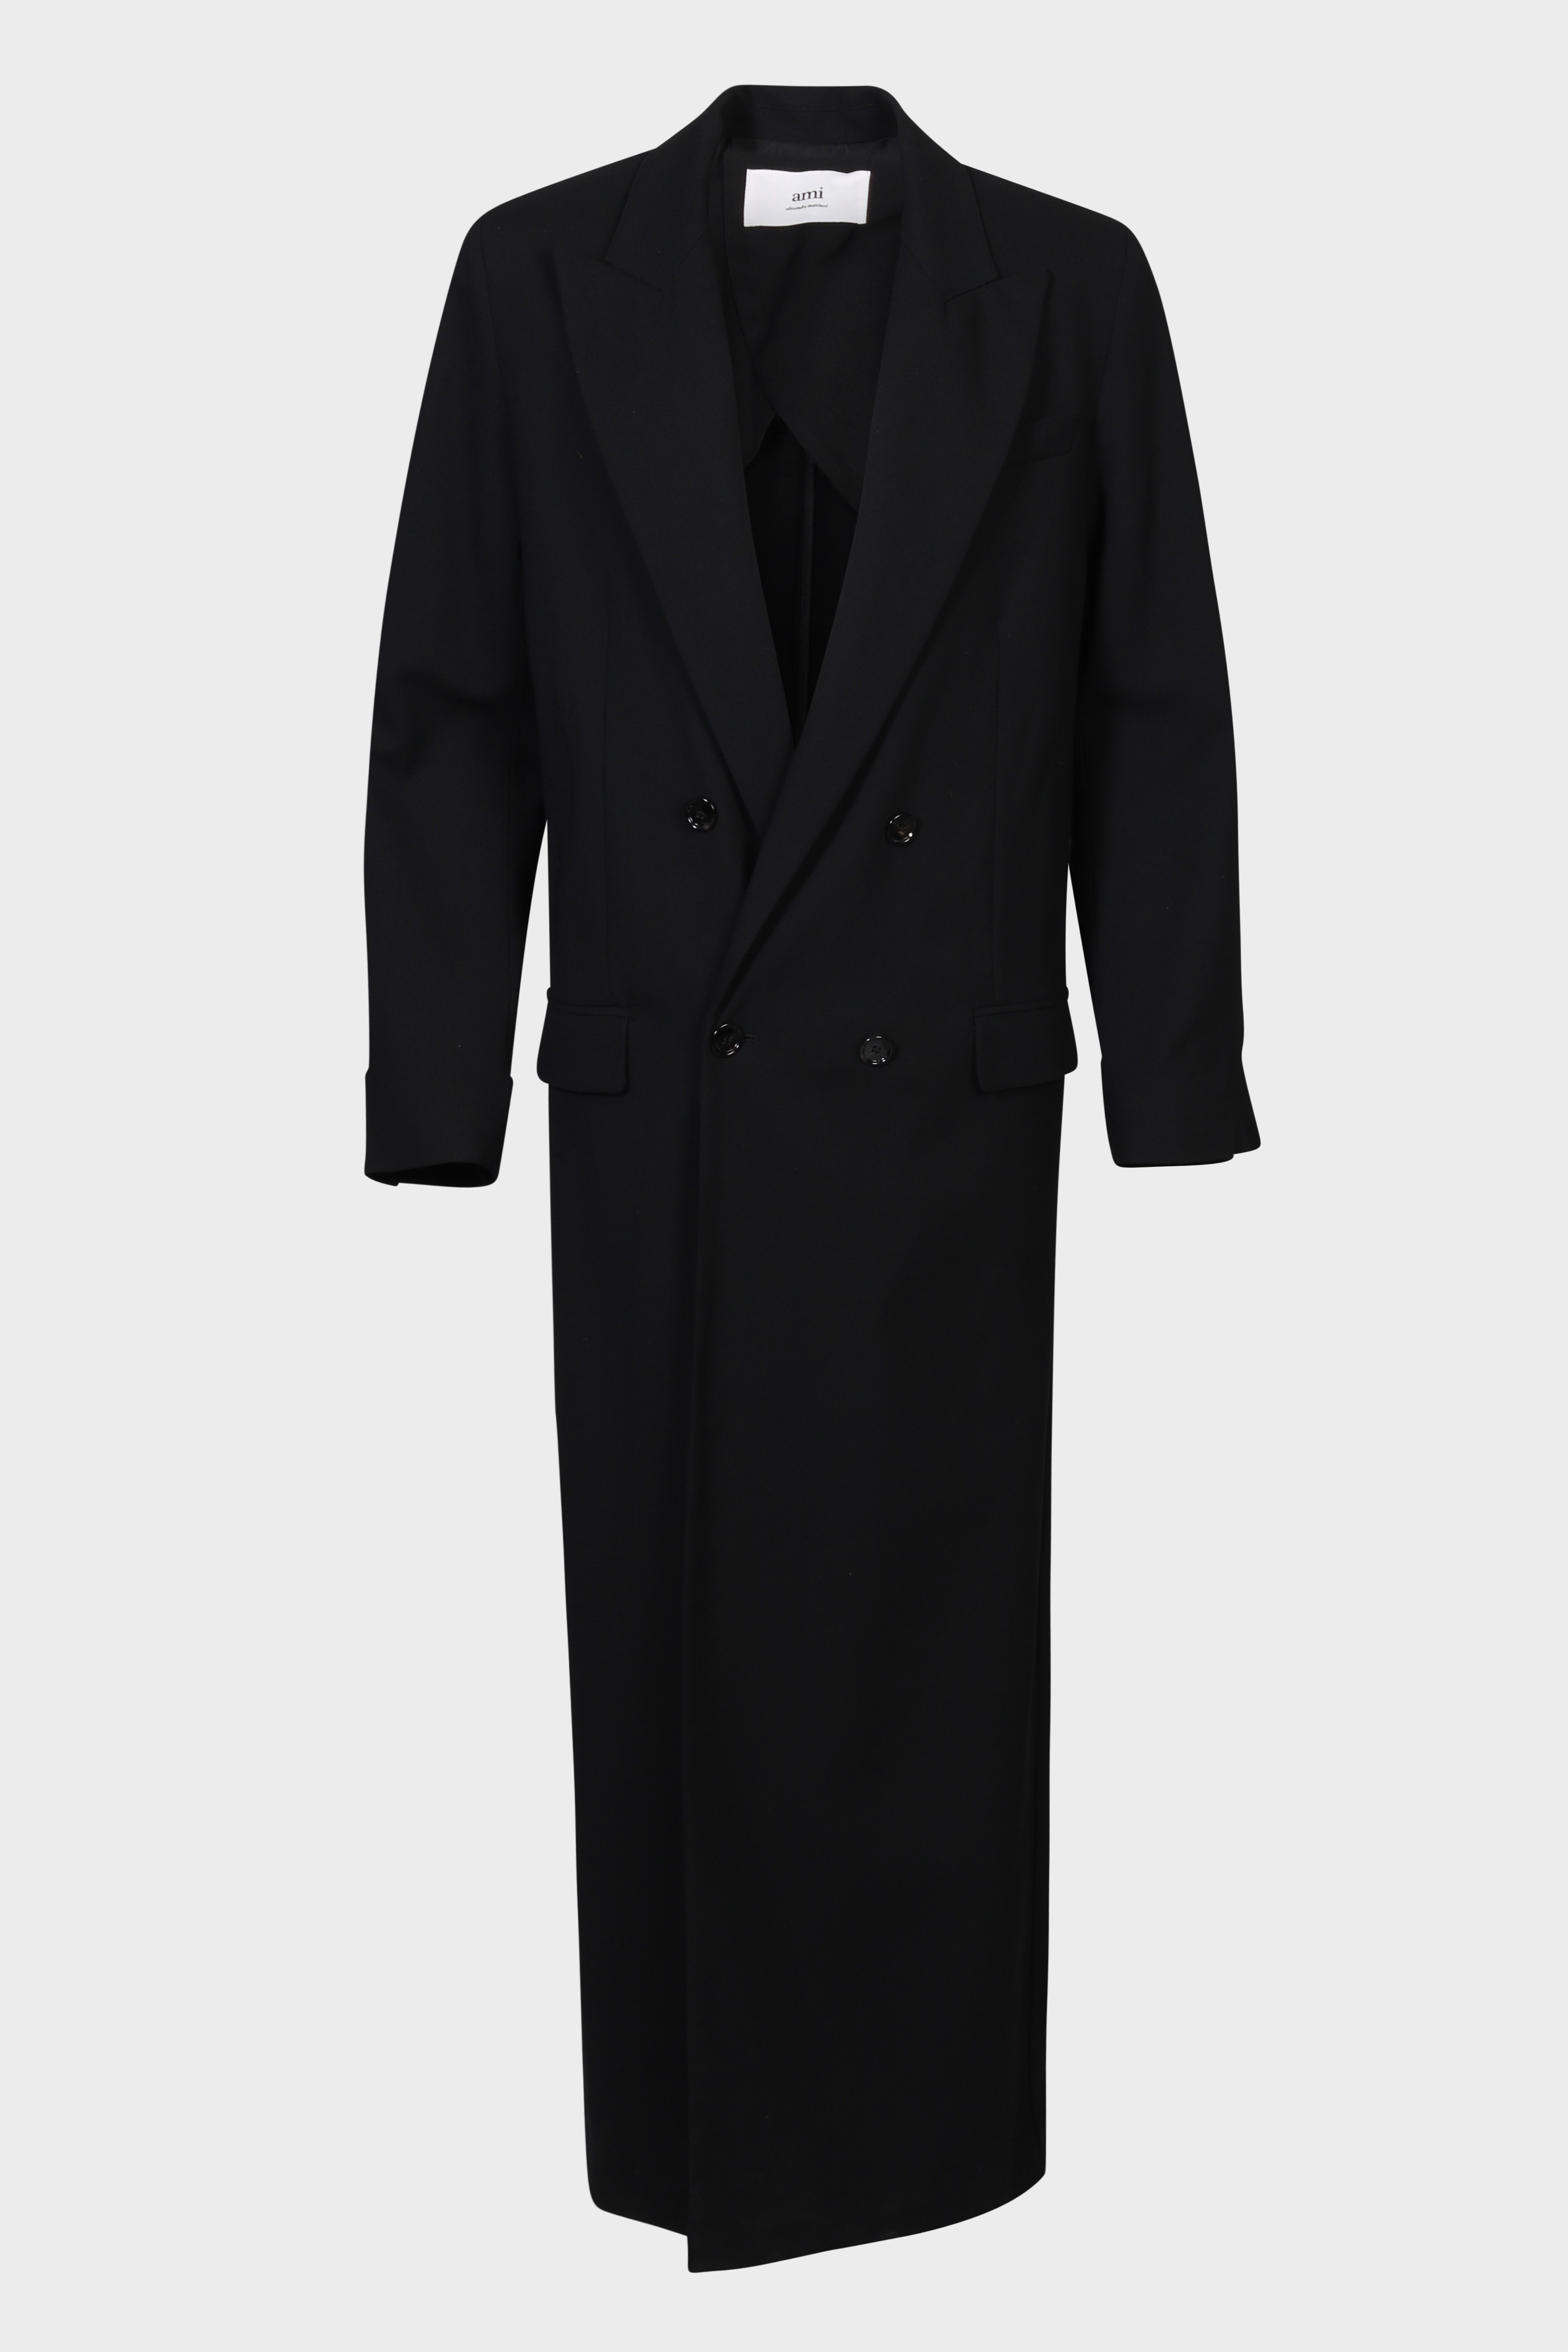 AMI PARIS Gabardine Coat Dress in Black FR40 / DE38